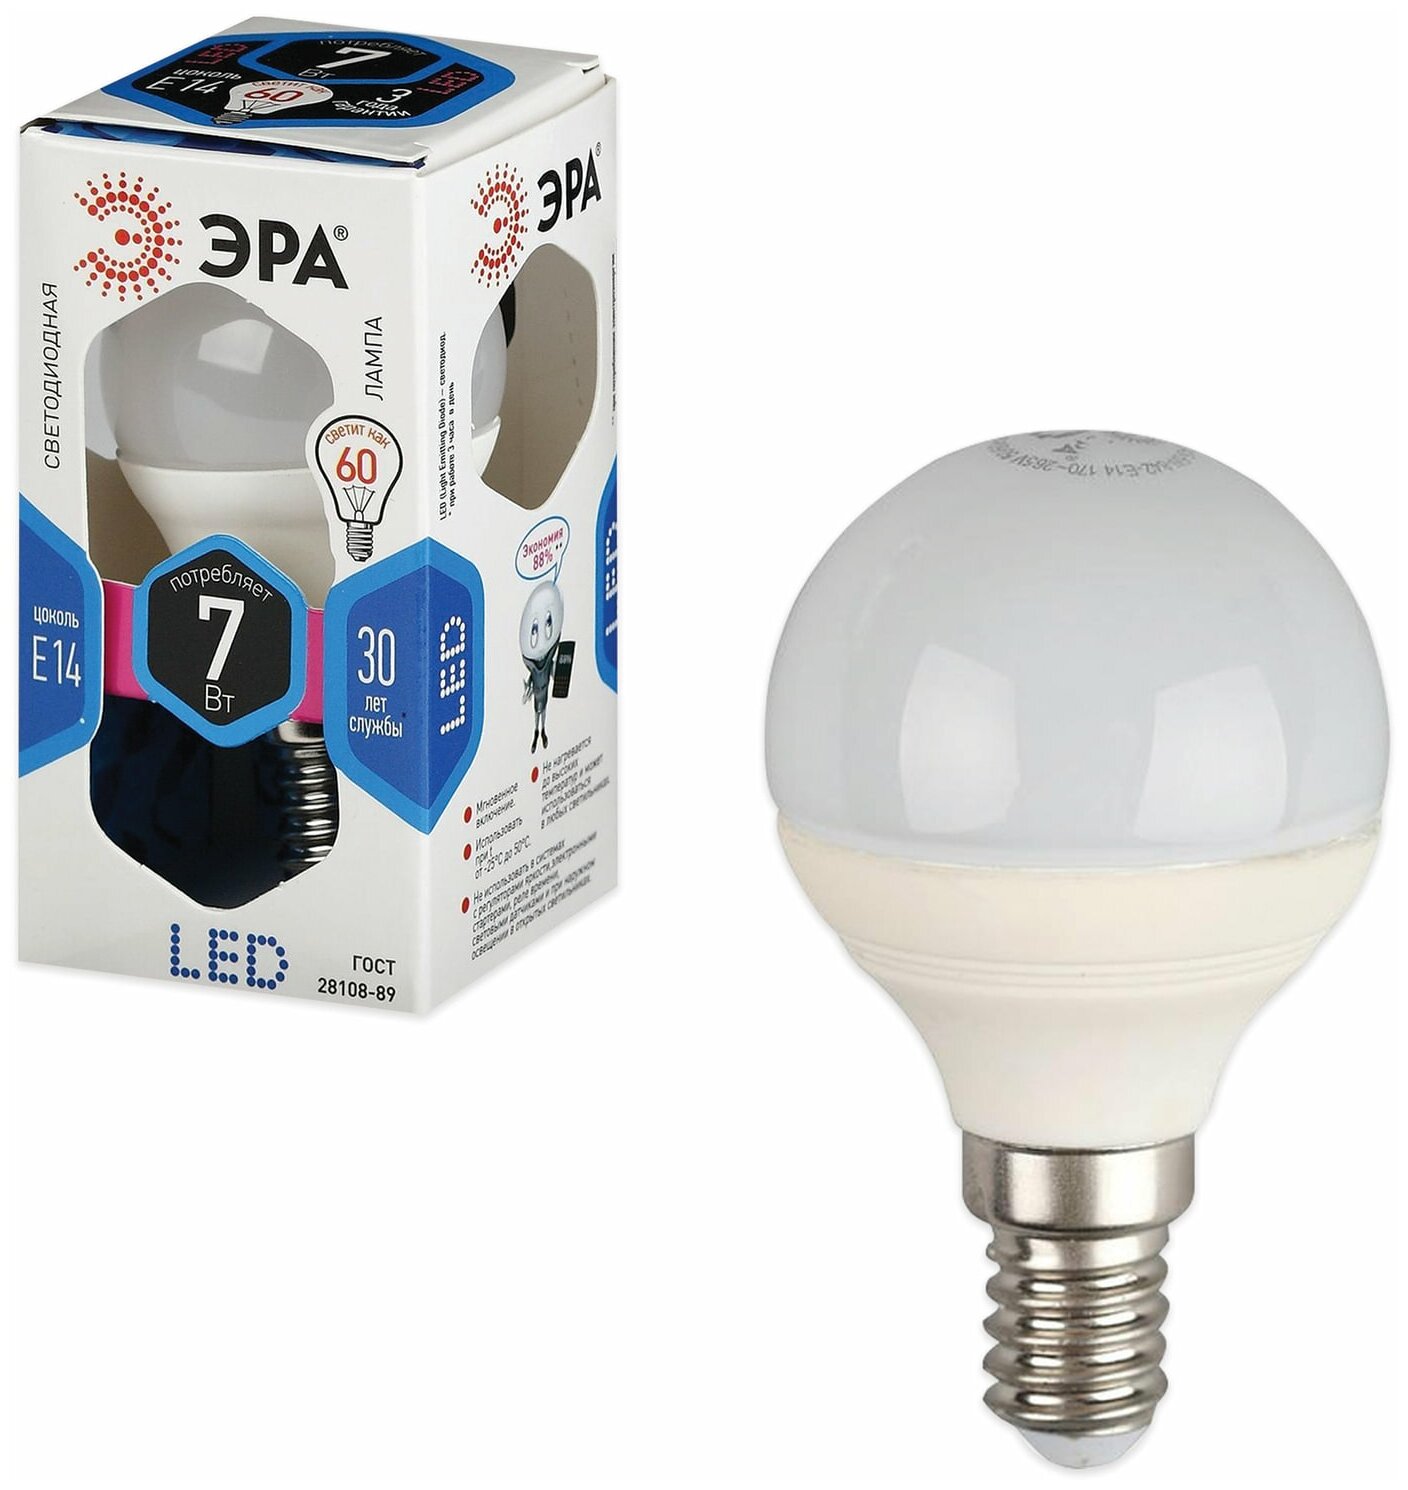 Лампа светодиодная ЭРА 7 (60) Вт цоколь E14 шар холодный белый свет 30000 ч LED smdP45-7w-840-E14